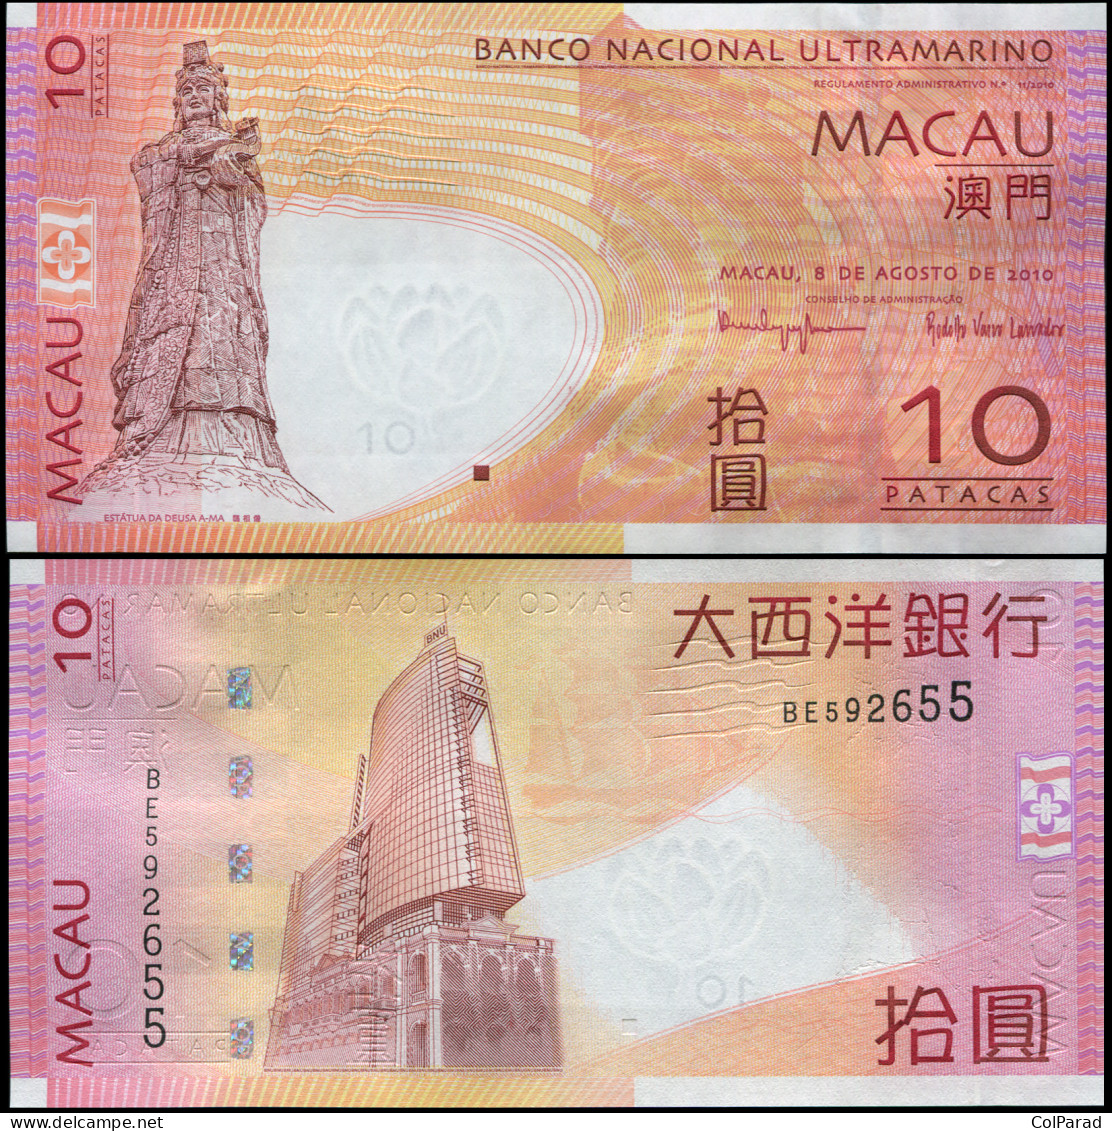 MACAO 10 PATACAS - 08.08.2010 - Paper Unc - P.80b Banknote - Macao